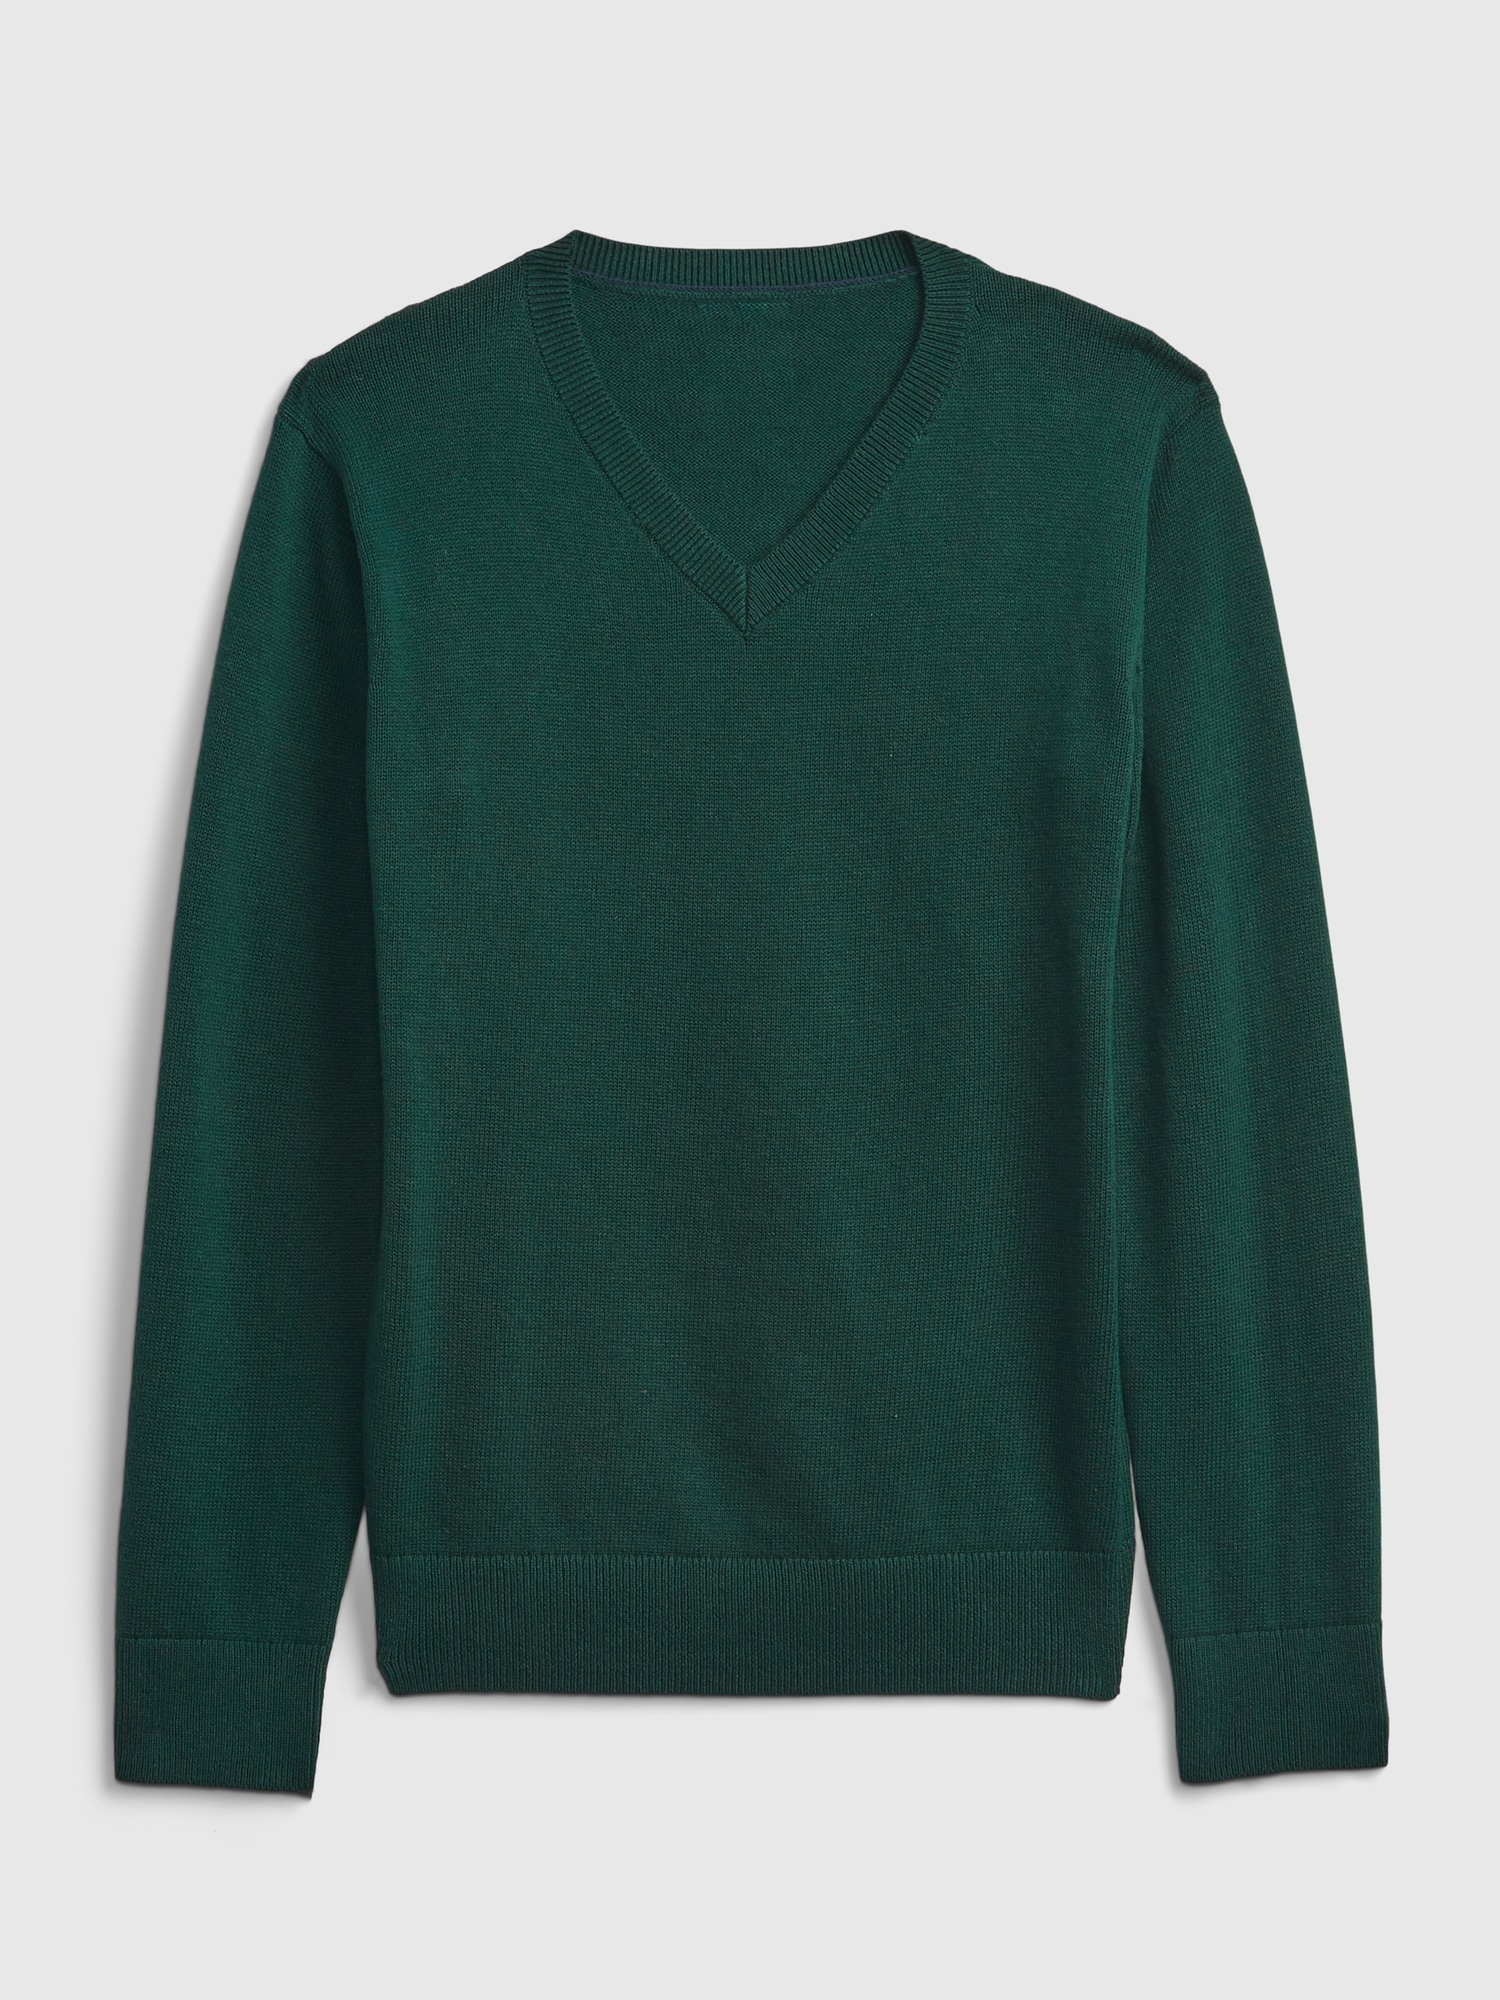 Gap Kids Organic Cotton Uniform Sweater green. 1